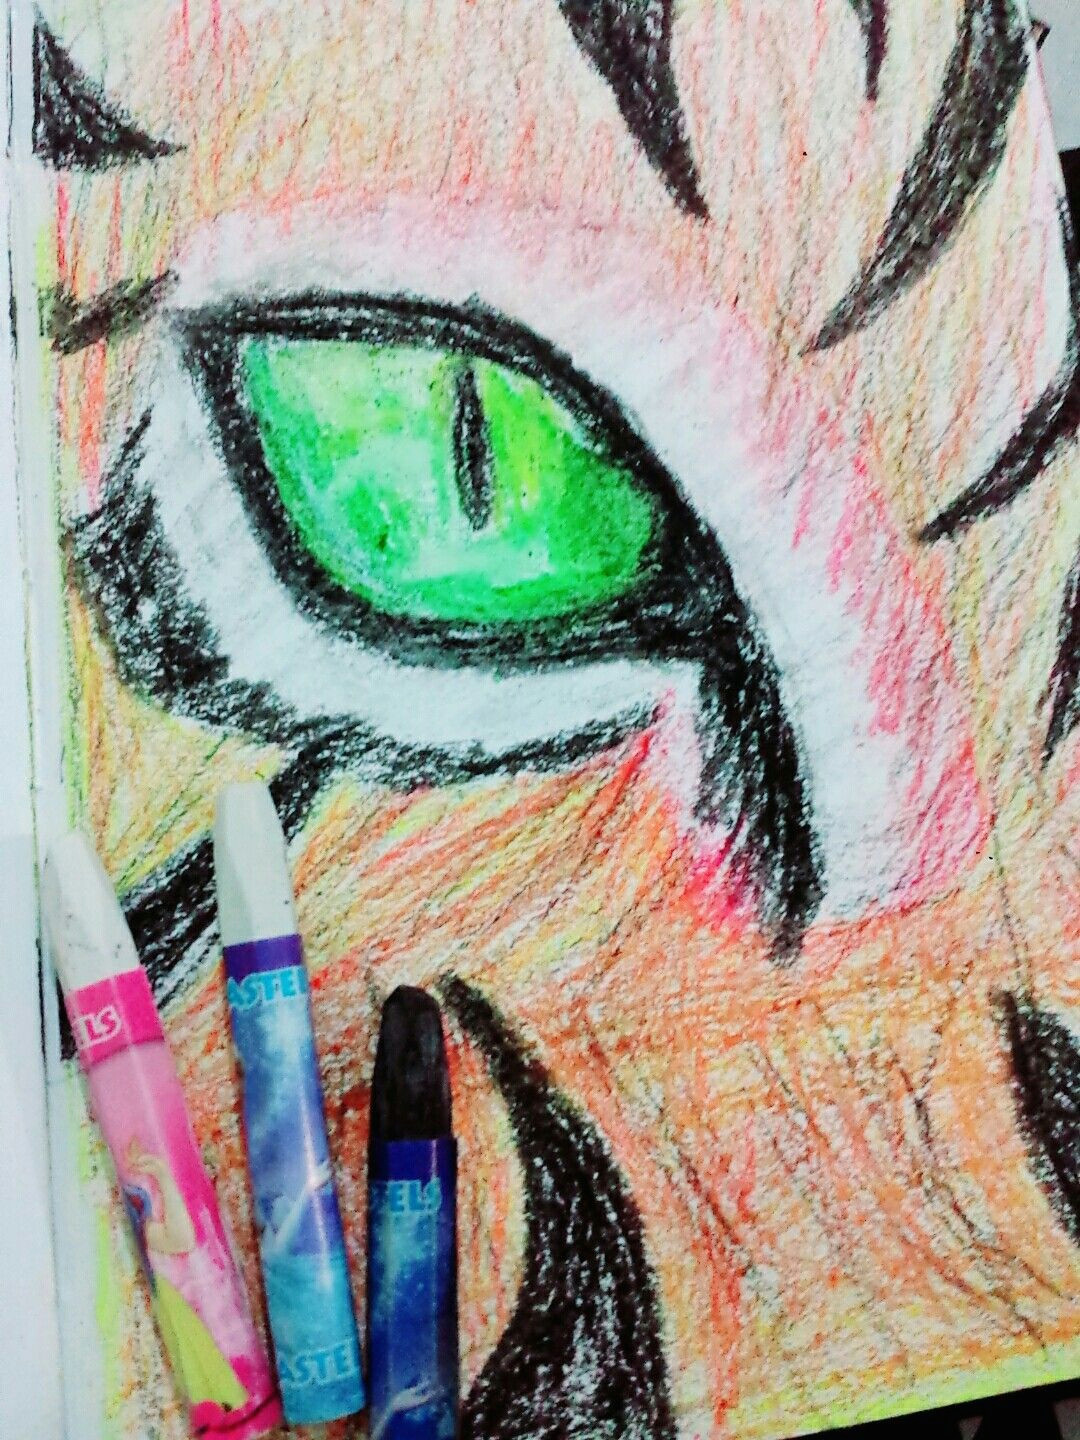 Drawing An Eye with Pastels Loin Eye Oil Pastel Drawing My Art Work Pinterest Oil Pastel